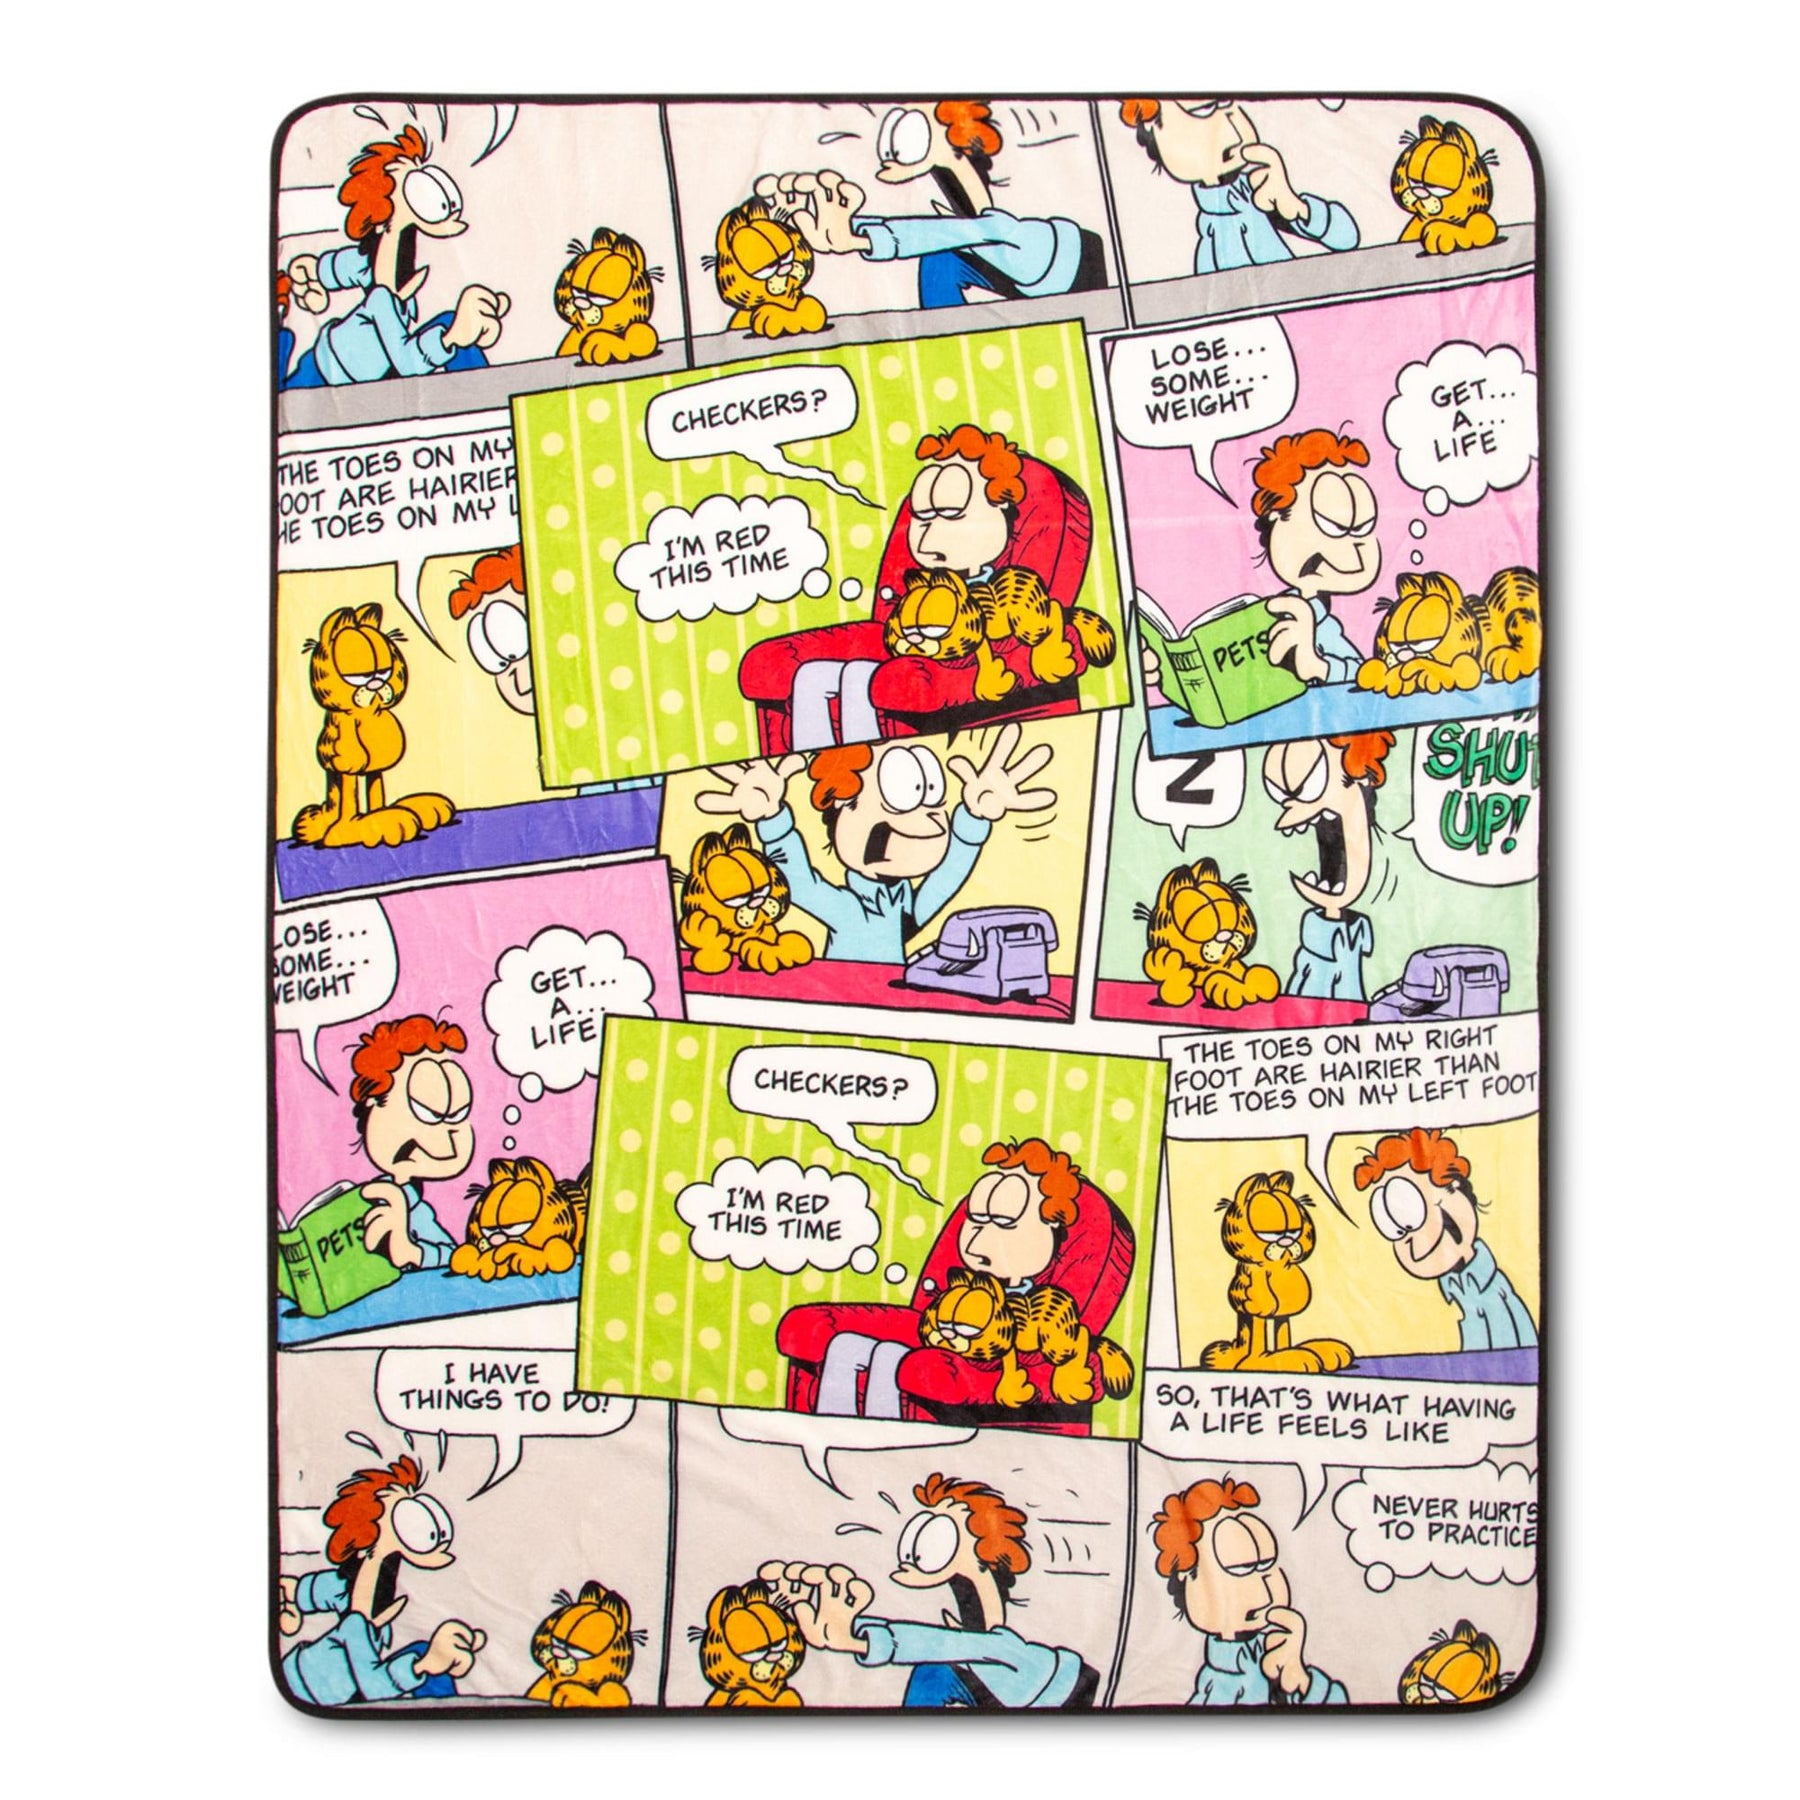 Garfield and Jon Comic Strip Panels Sherpa Throw Blanket | 50 x 60 Inches